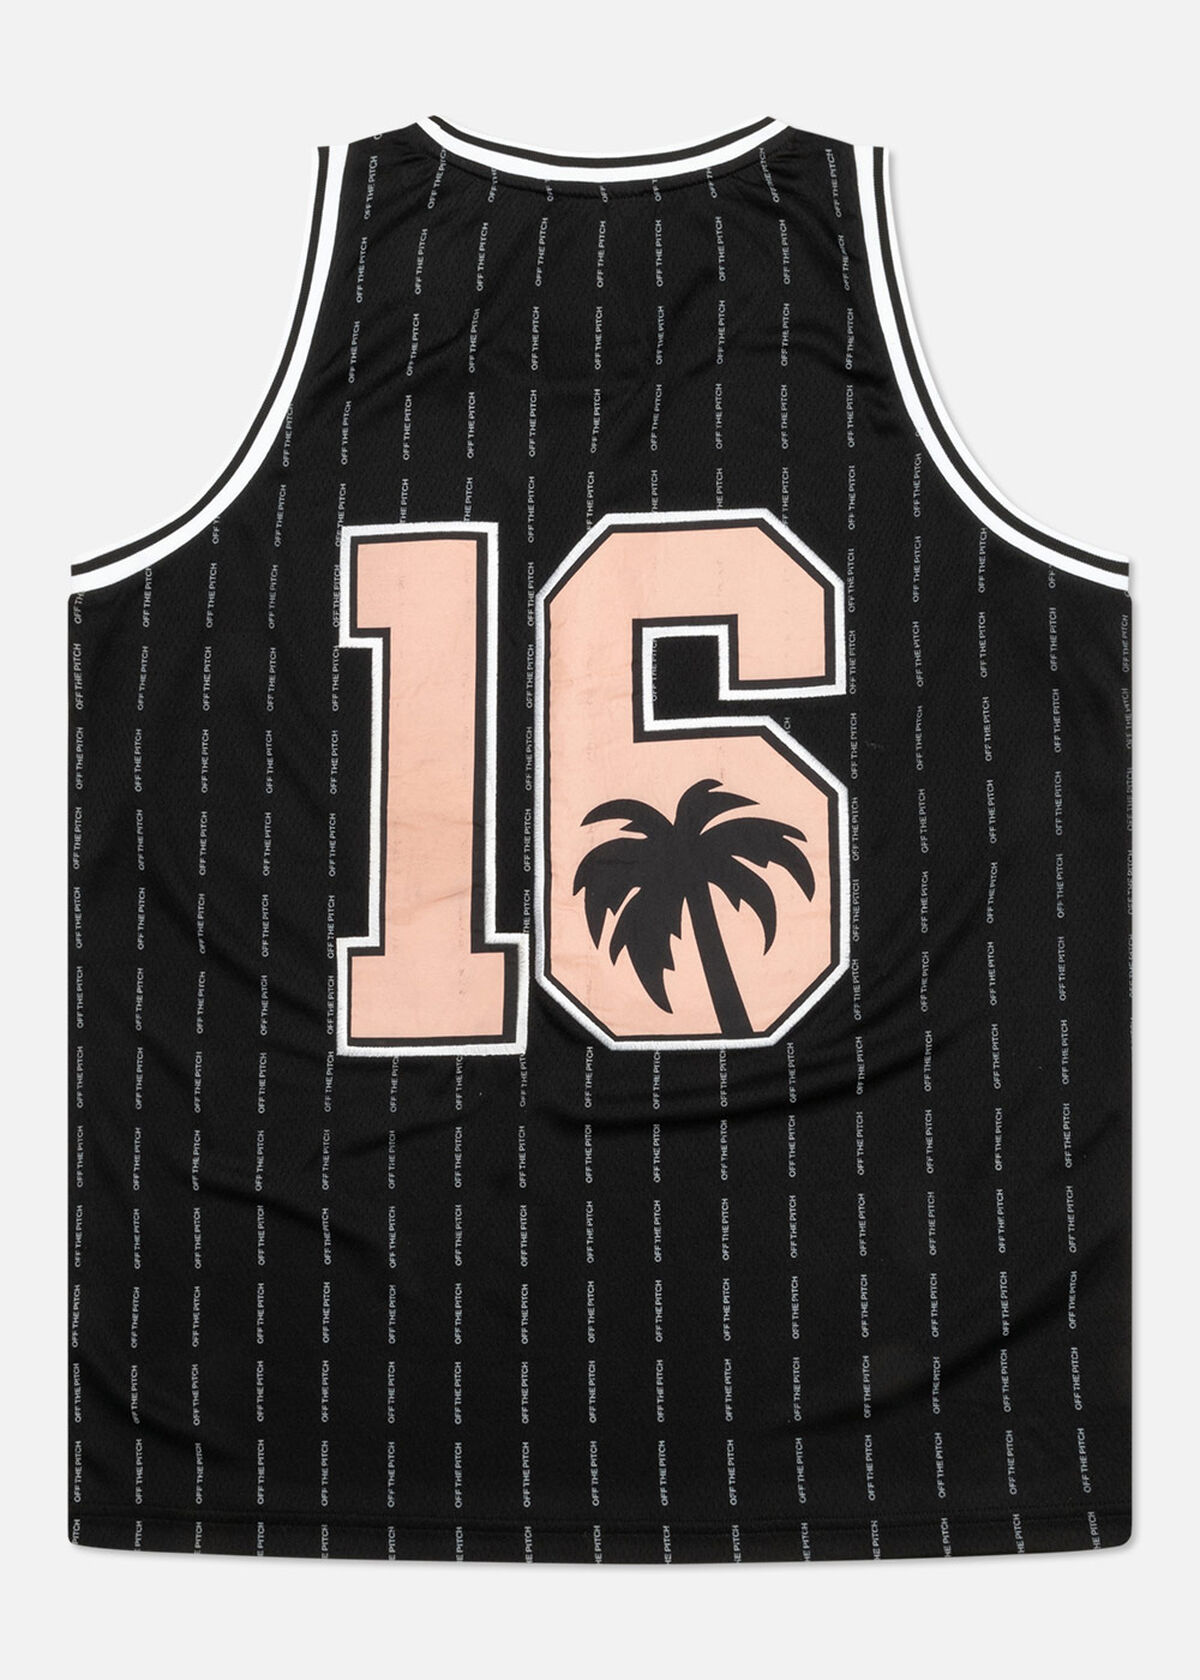 Tropea Basketball Top - 100% Polyester, Black, hi-res